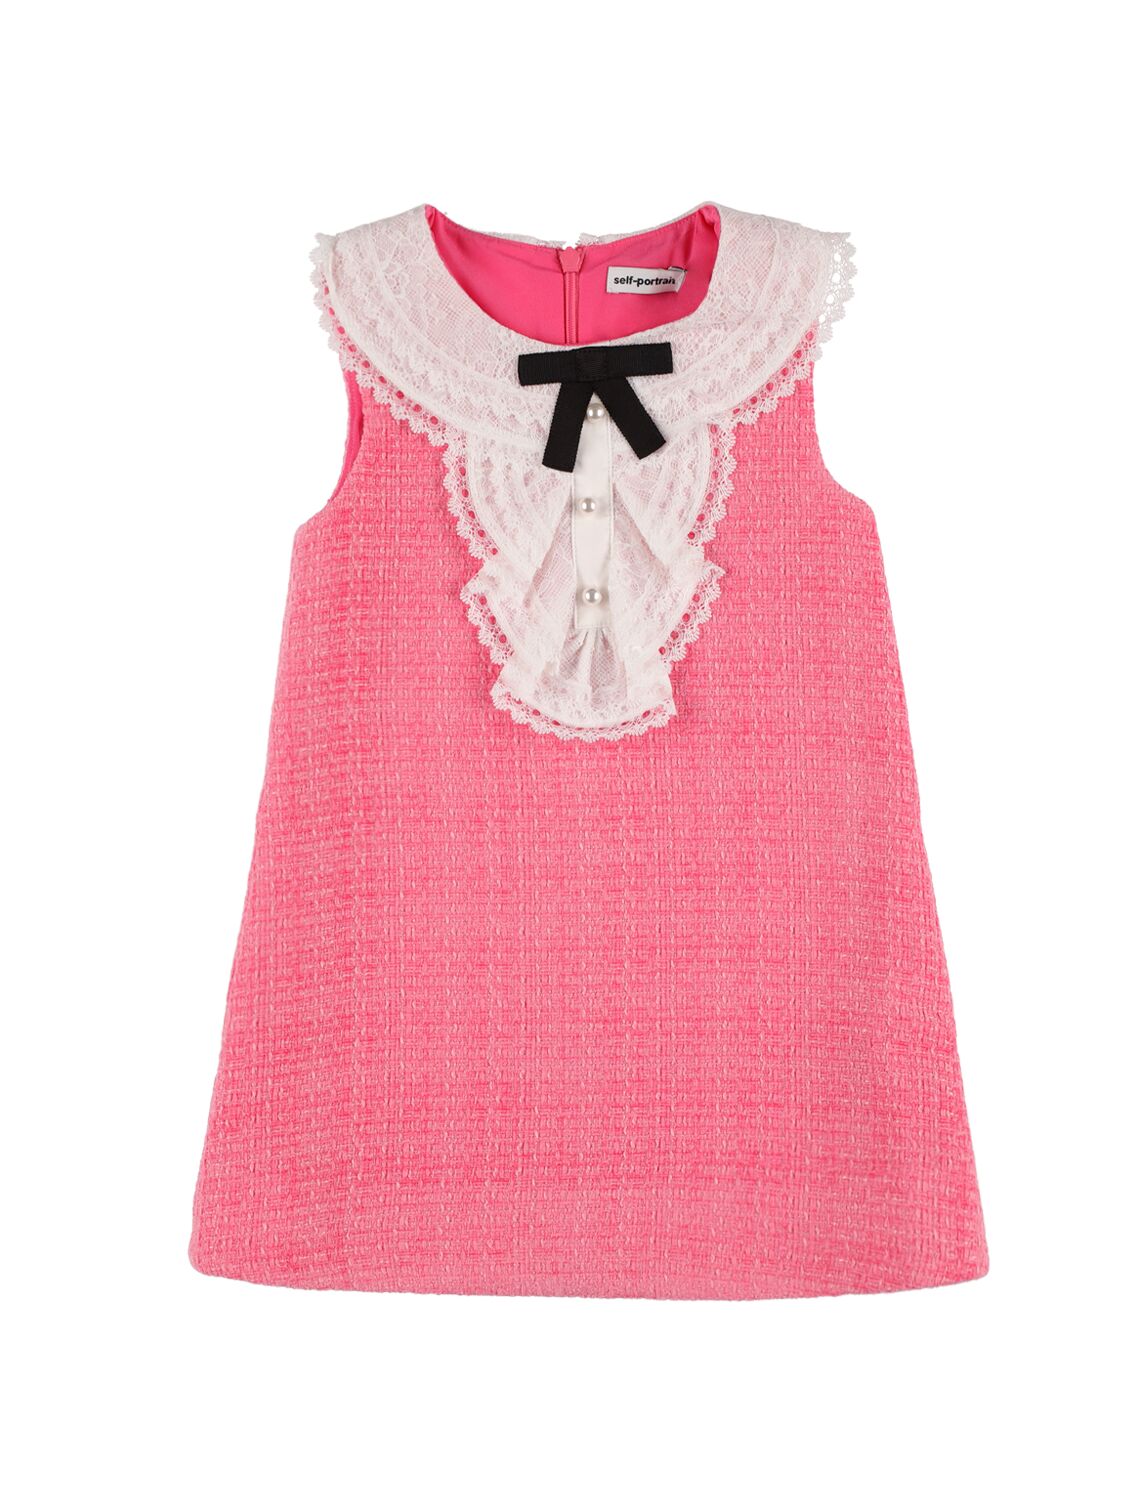 Self-portrait Kids' Cotton Knit Sleeveless Dress W/ Bow In Dark Pink